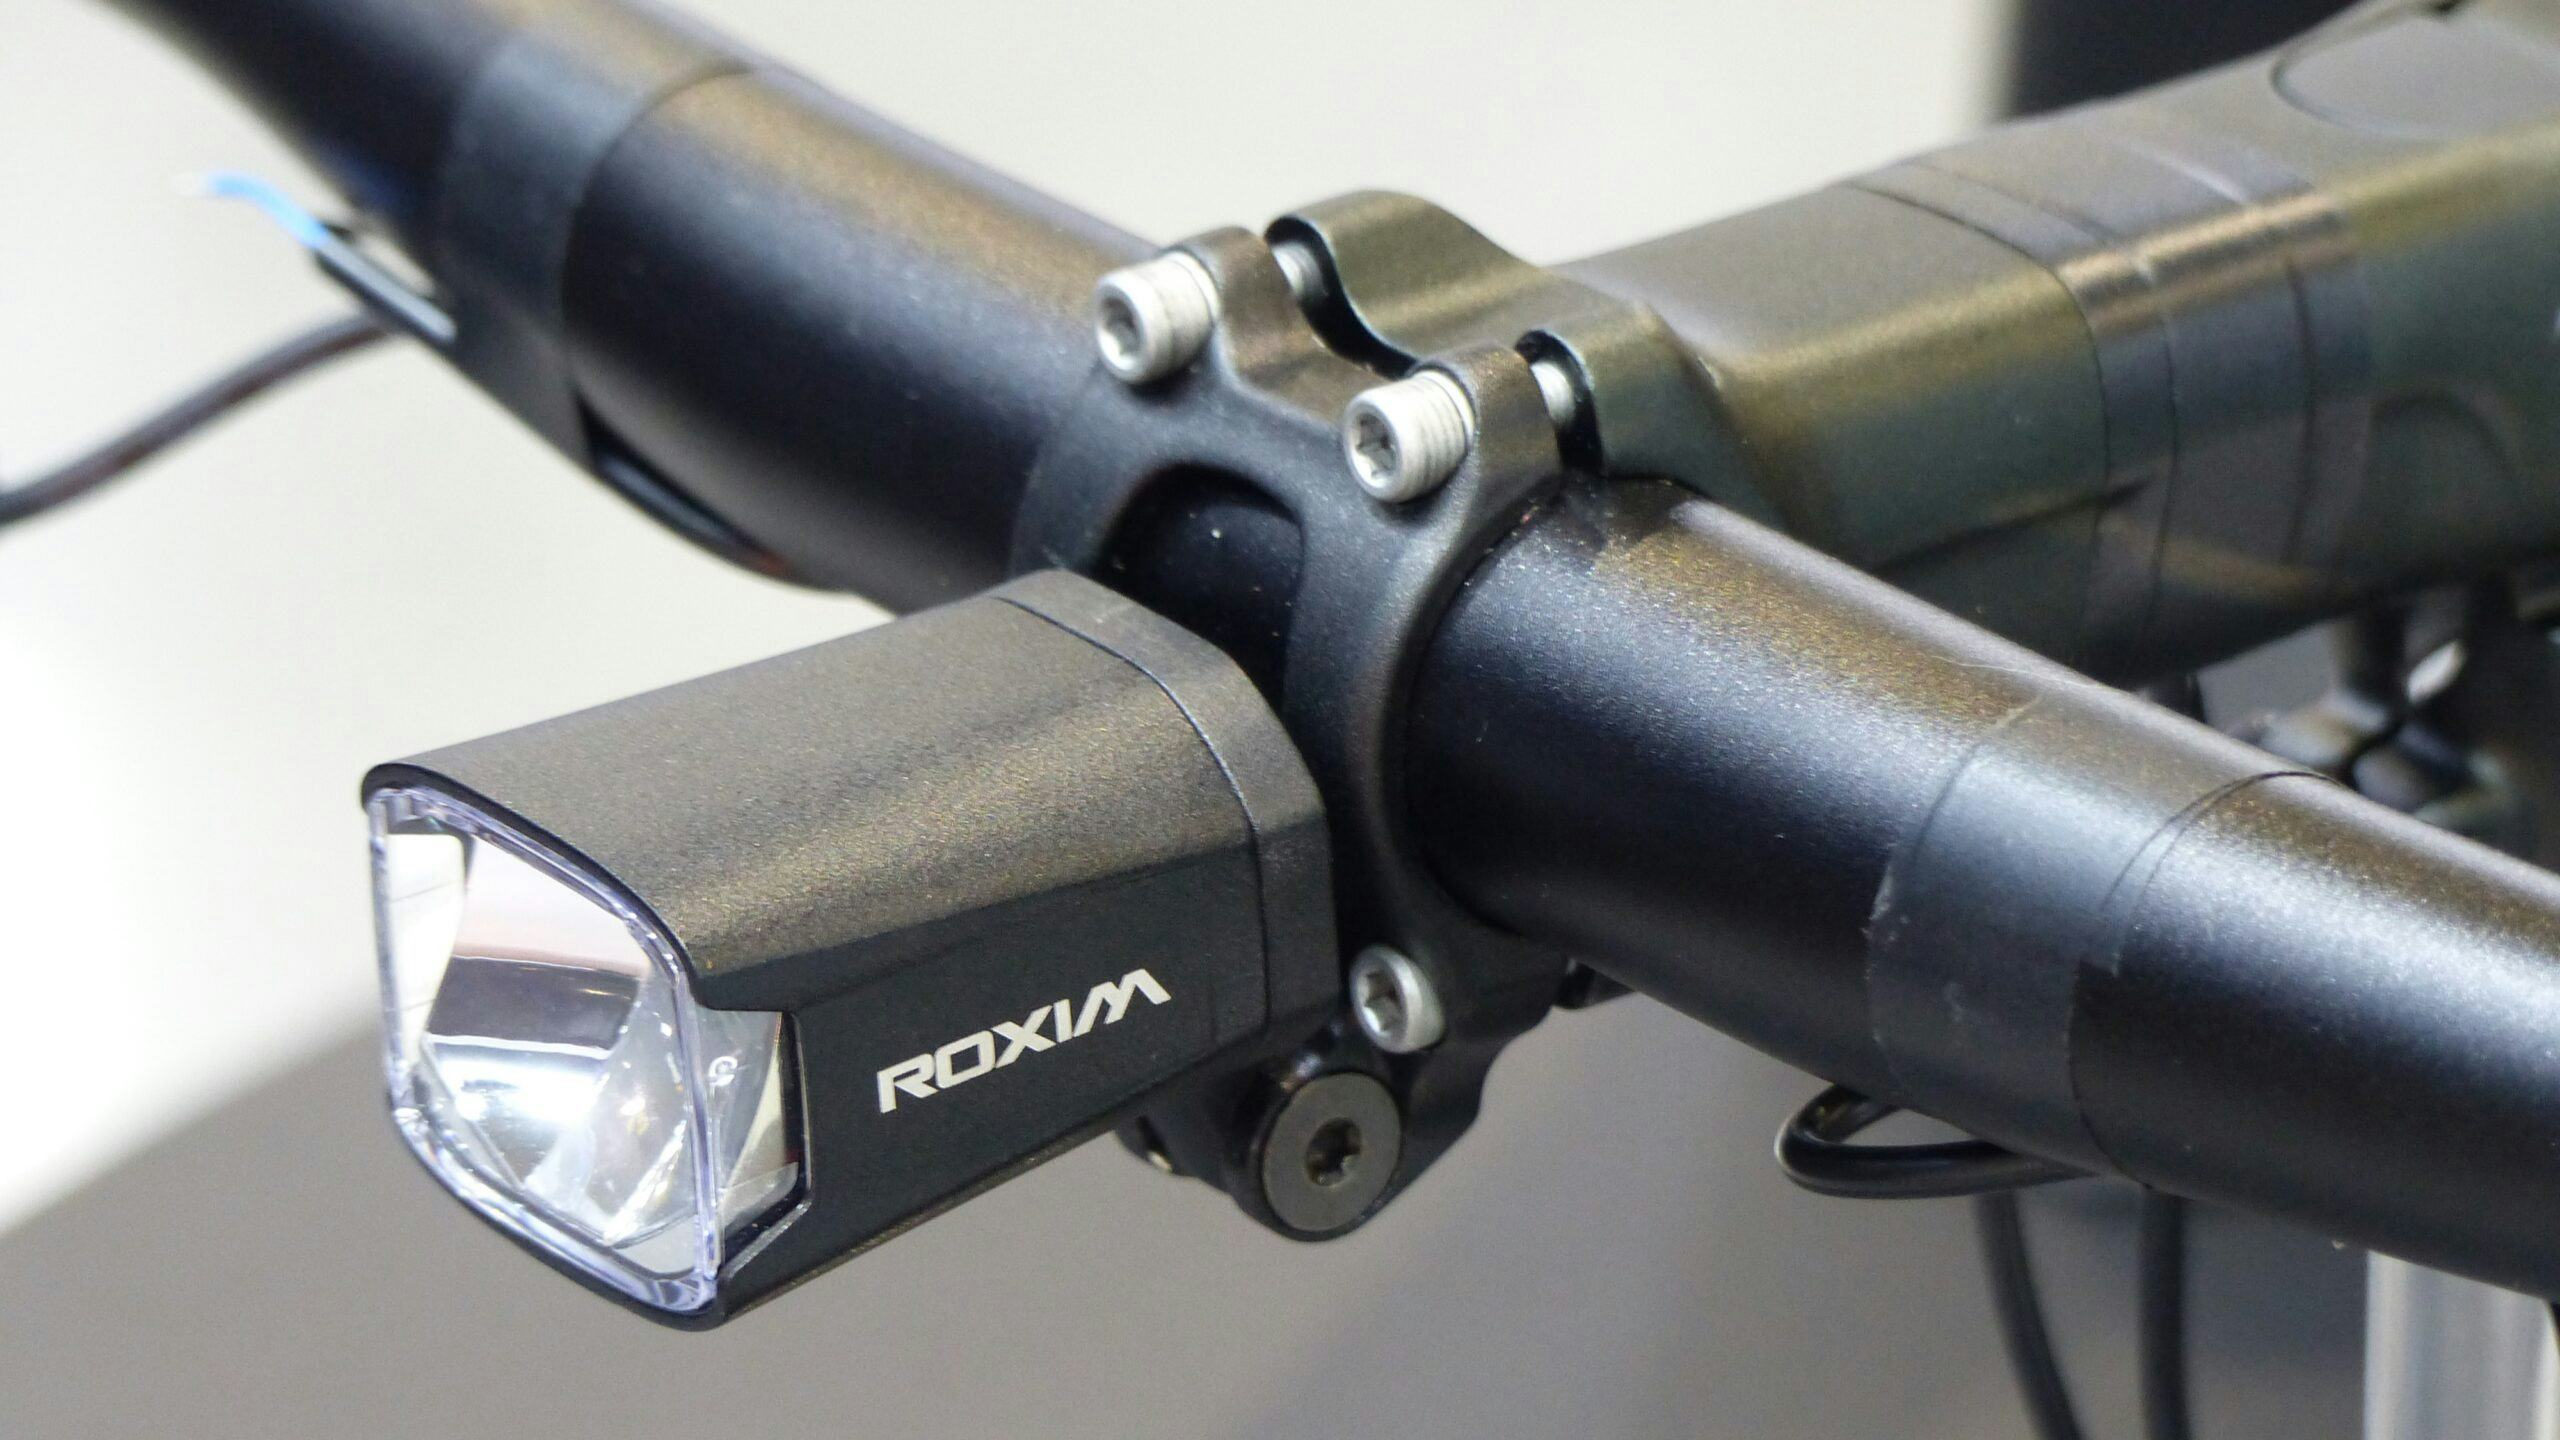 Roxim partners with Magura and Tektro to offer the brake light function. – Photo Bike Europe